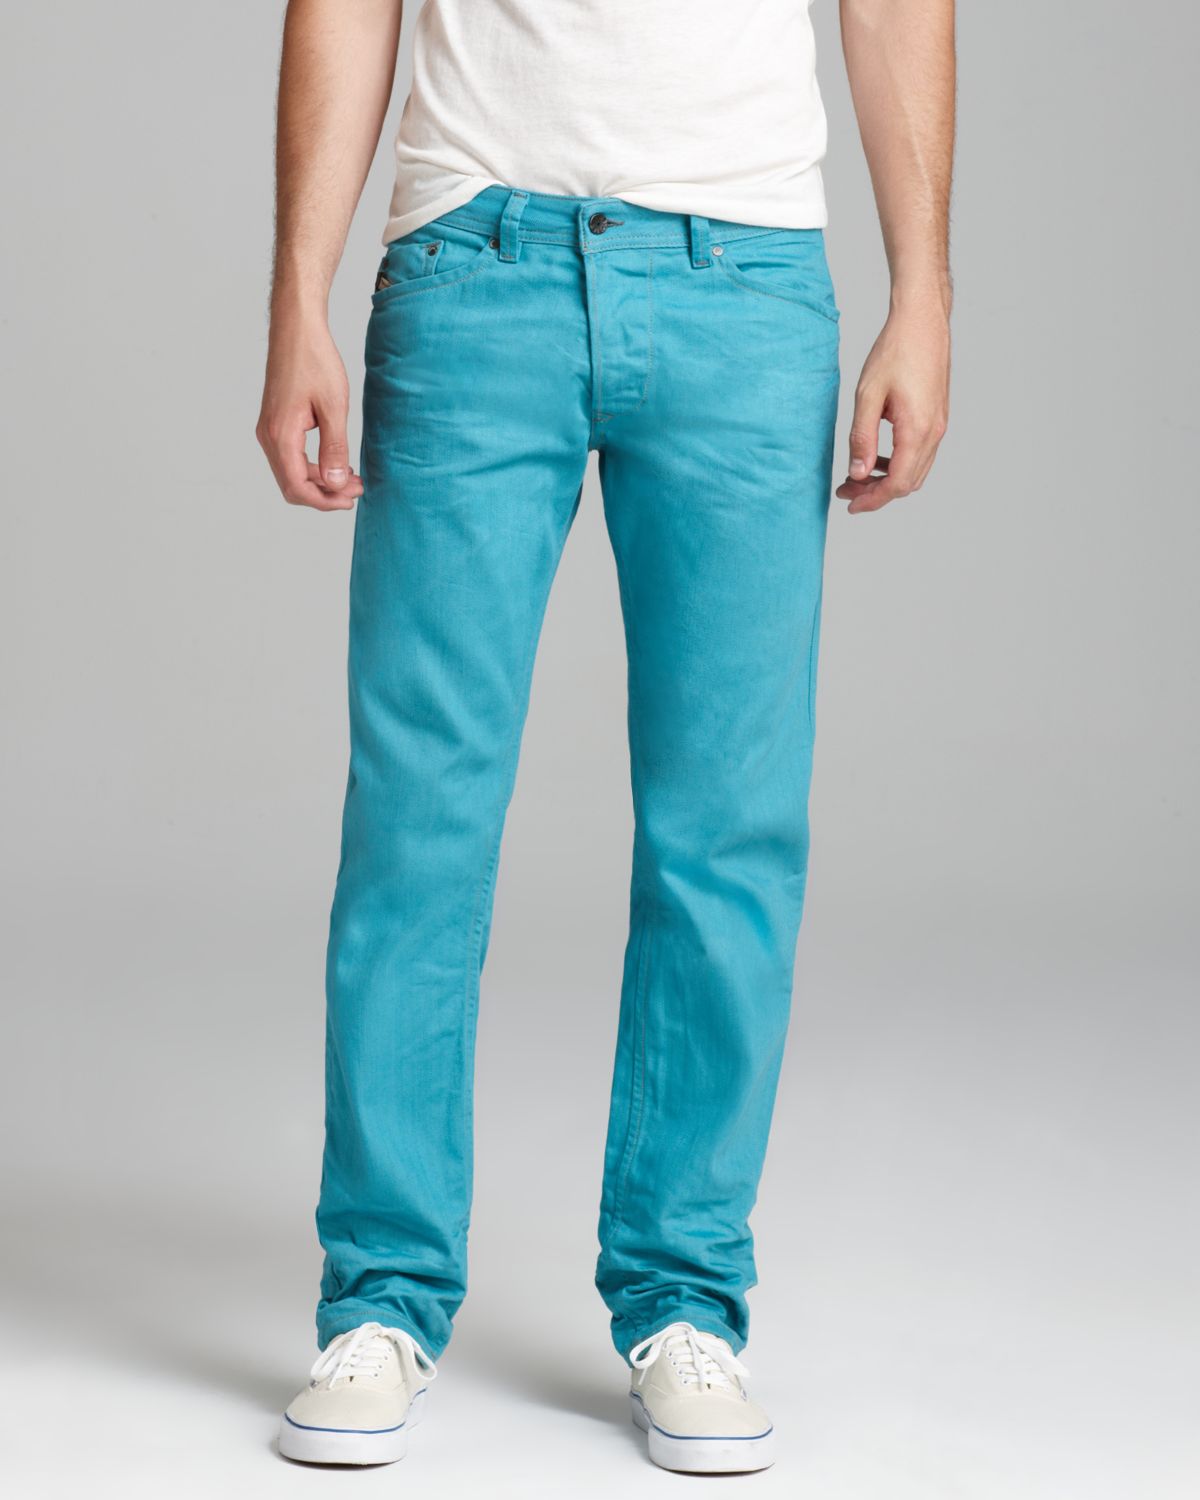 sea blue jeans